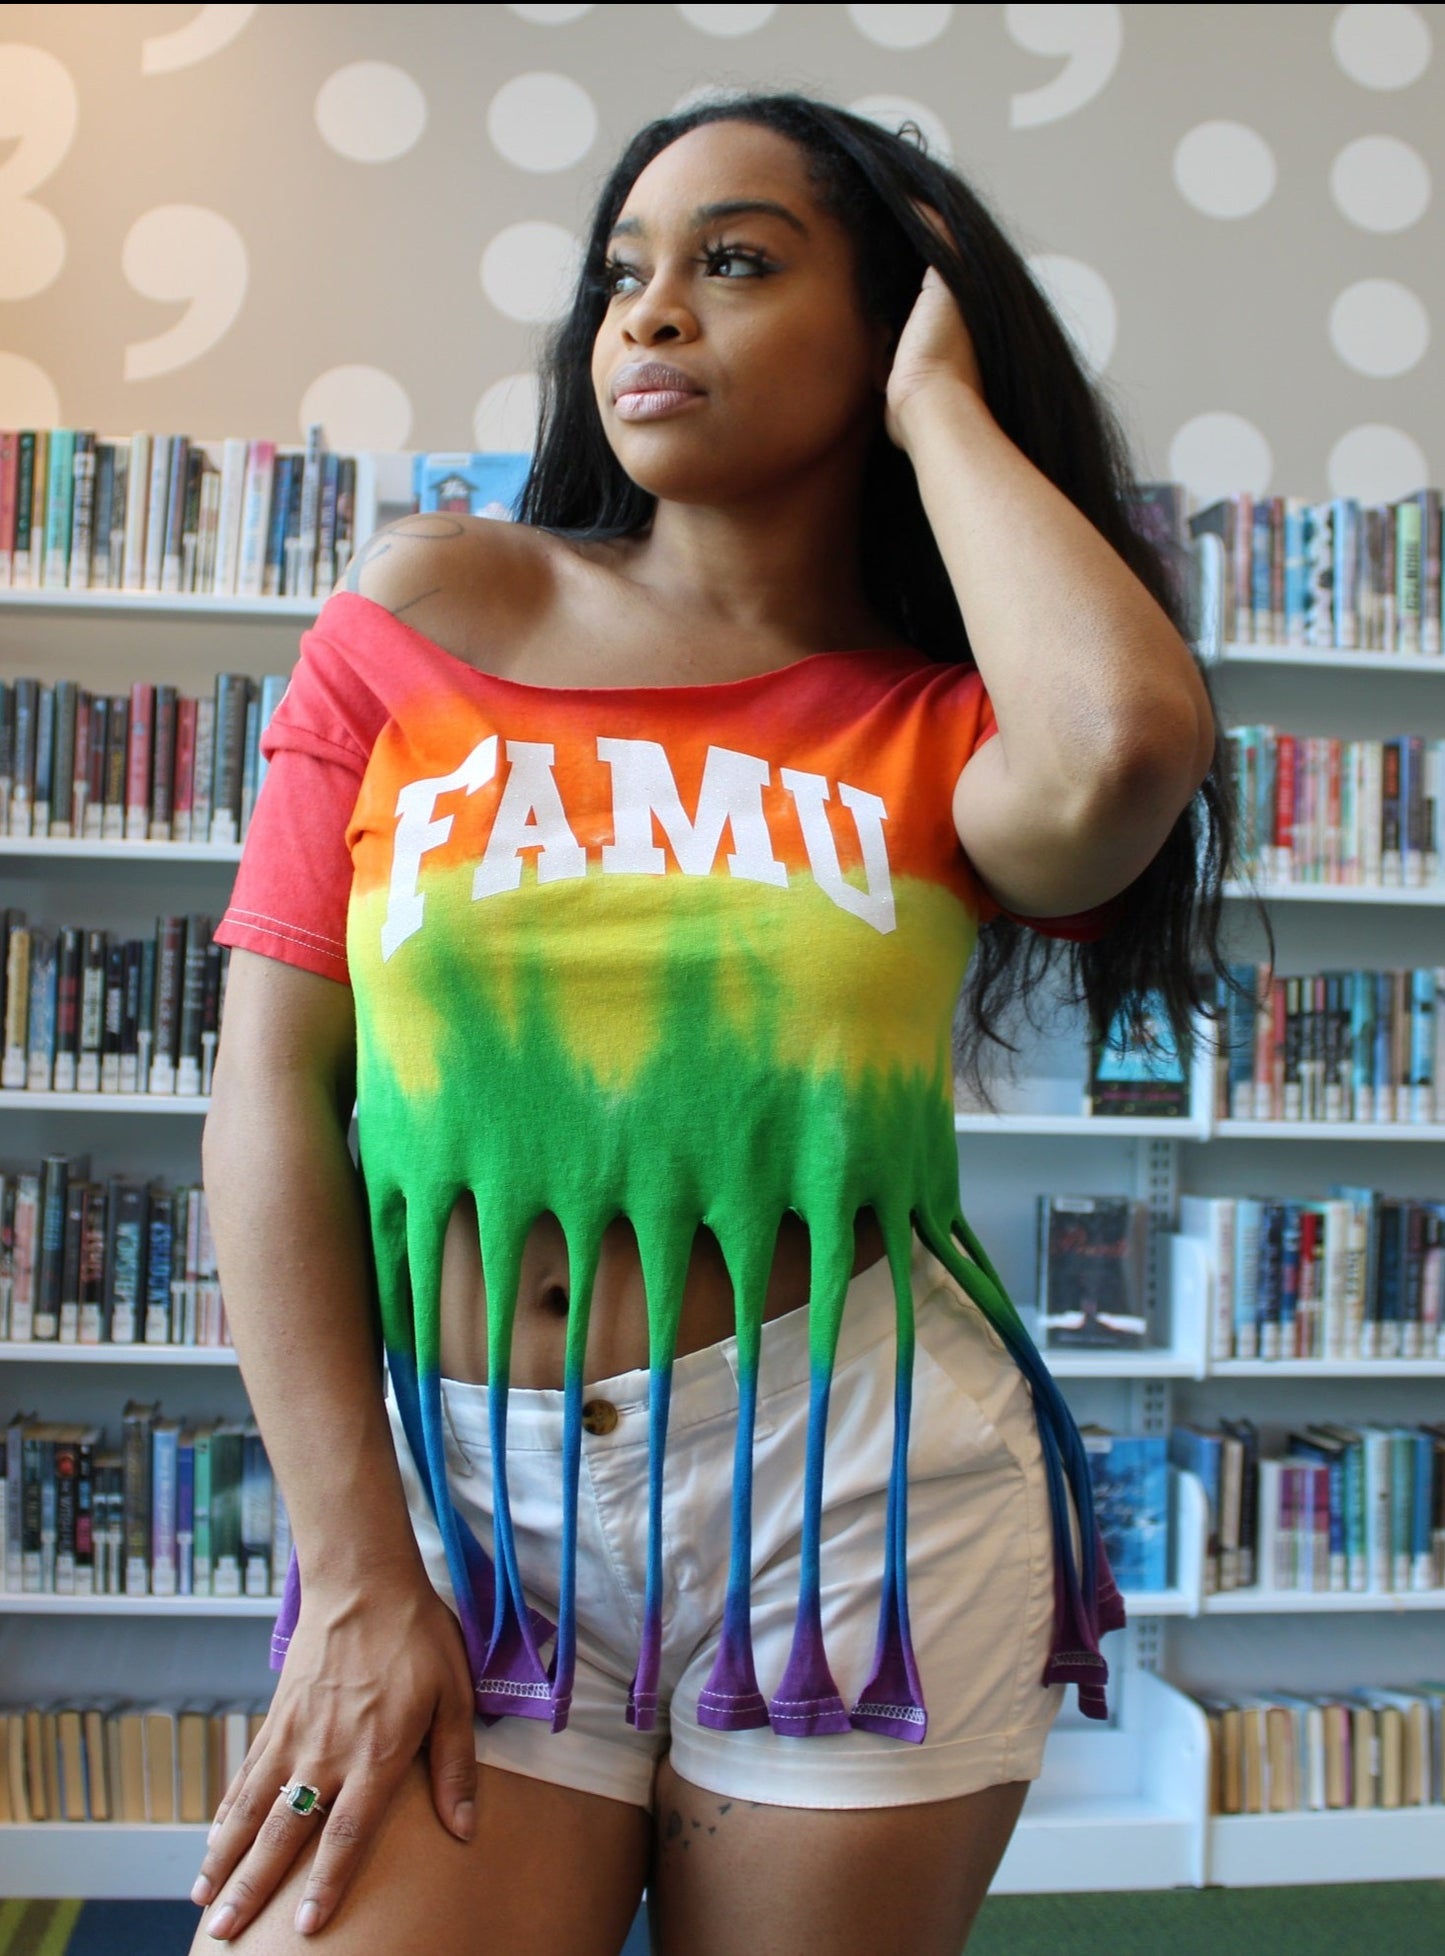 Handmade FAMU Pride Ombre Rainbow Short Sleeve Crew Fringe or Spider Web Back Design Summer T-Shirt